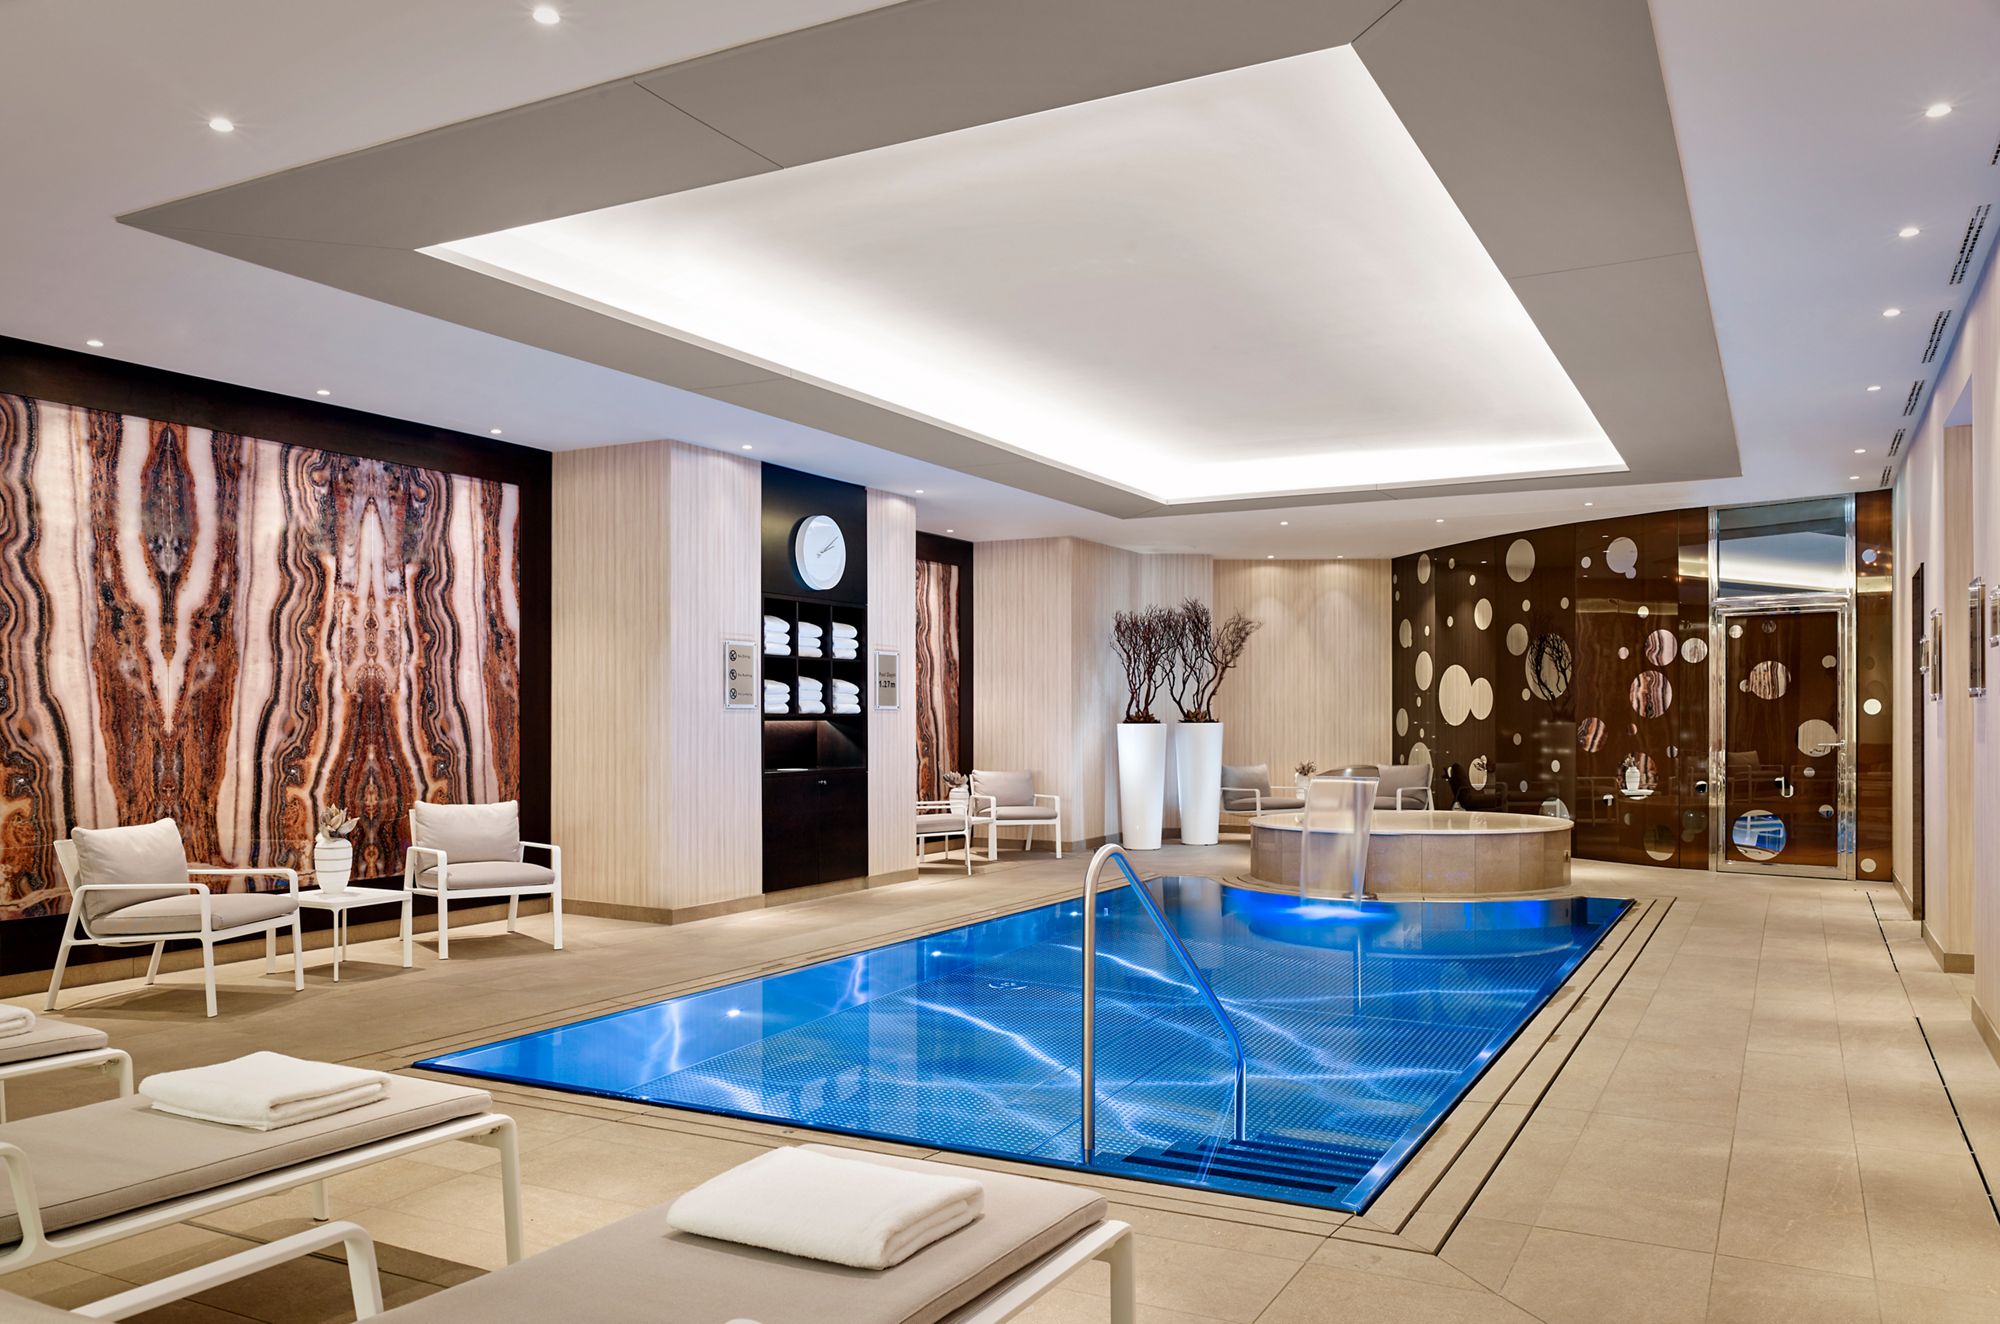 Stainless-steel pool by IMAGINOX in The Ritz-Carlton, Berlin